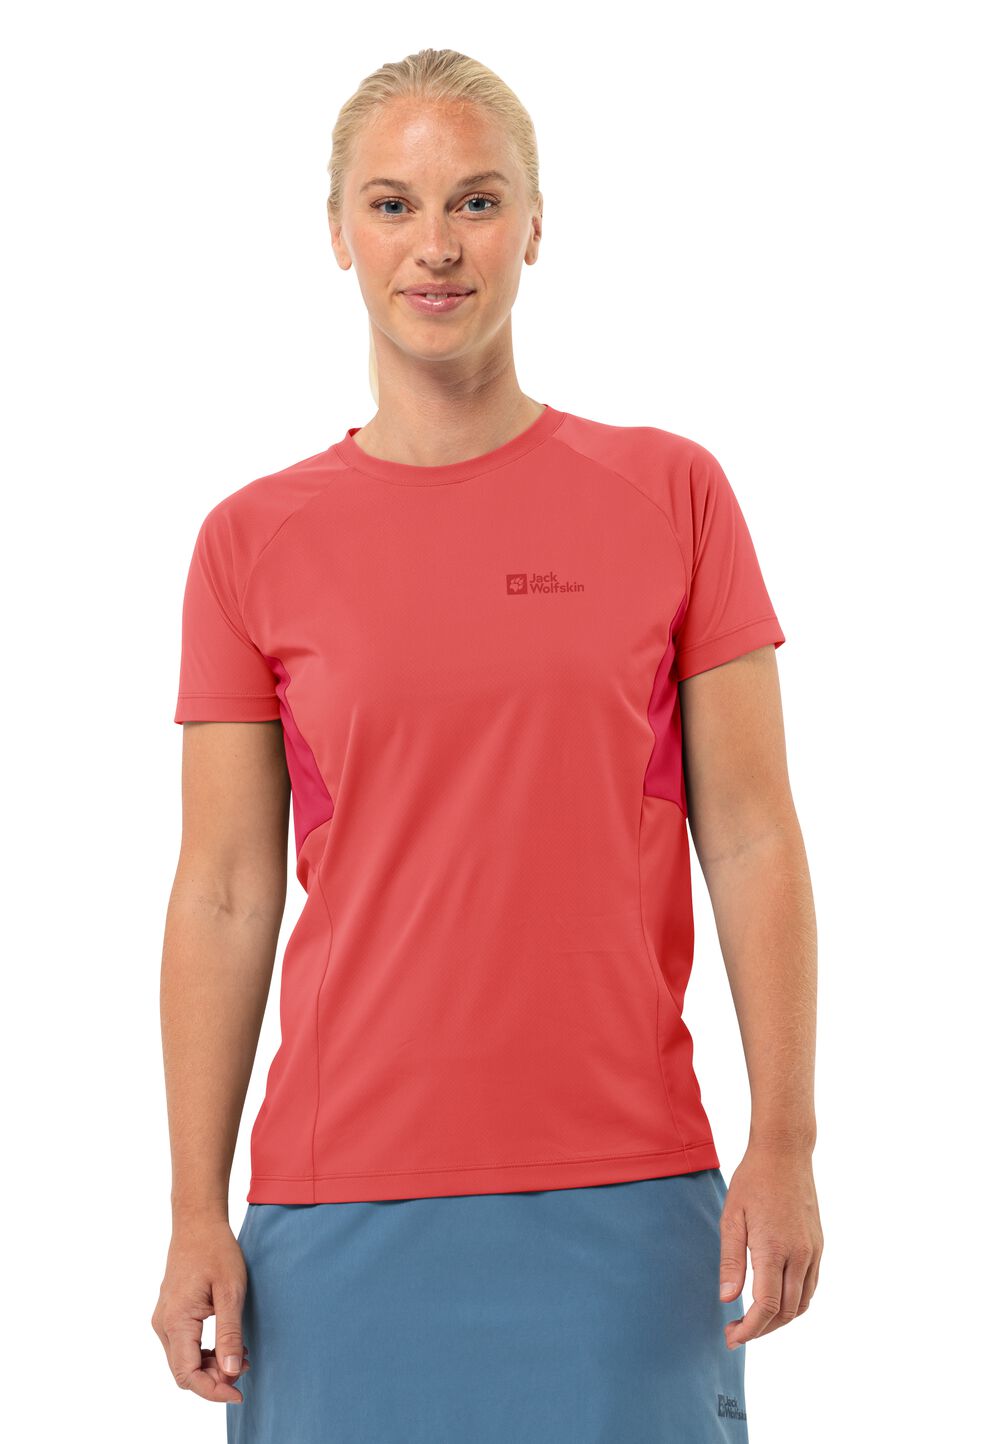 Jack Wolfskin Narrows T-Shirt Women Functioneel shirt Dames XS rood vibrant red